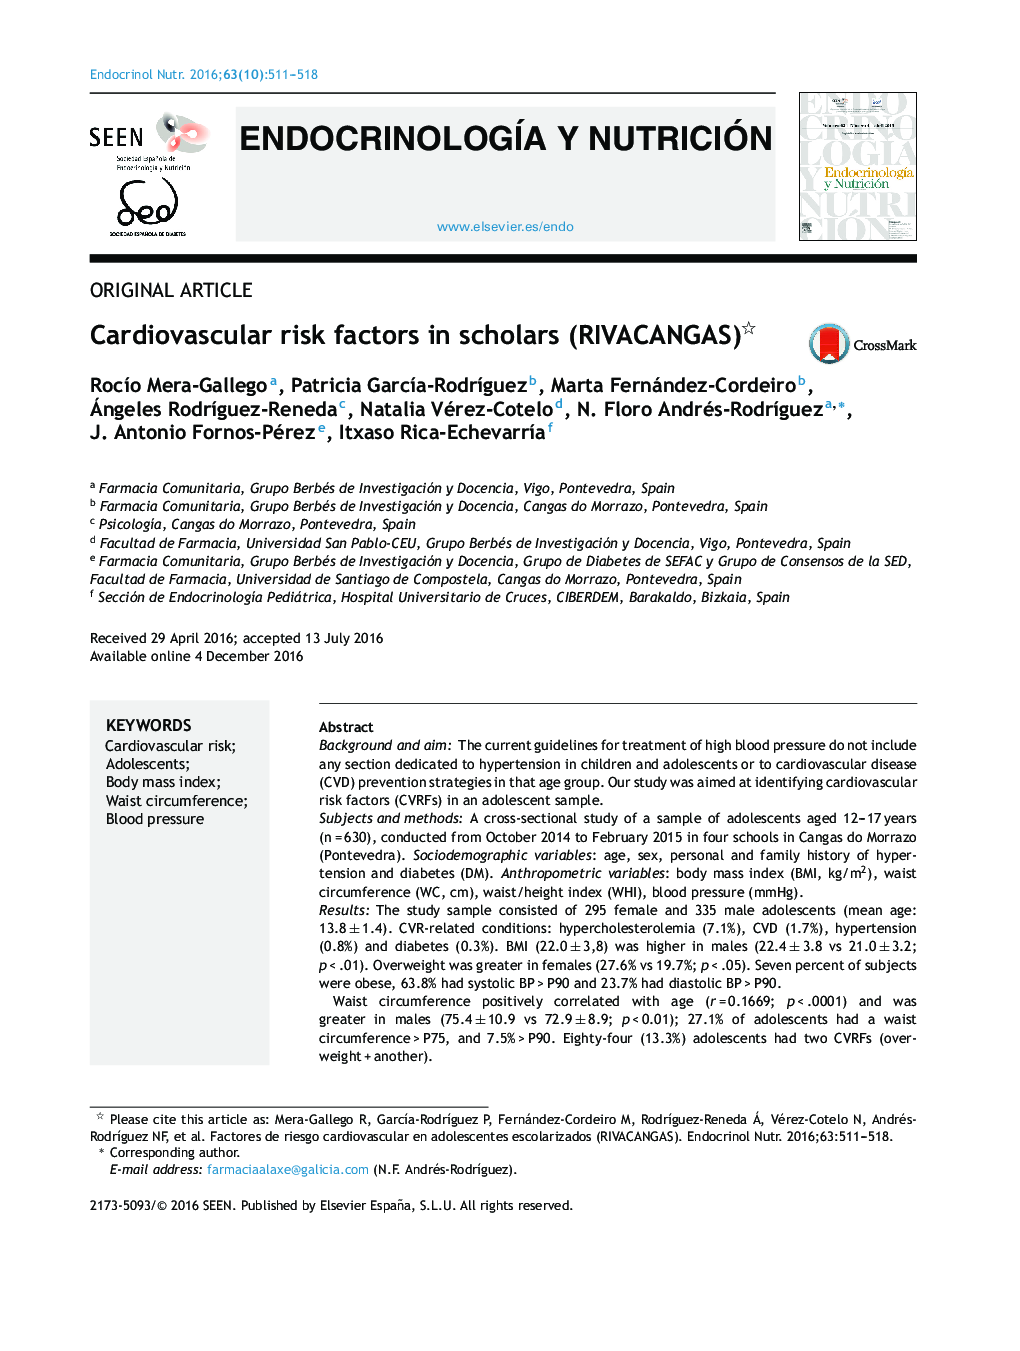 Cardiovascular risk factors in scholars (RIVACANGAS)